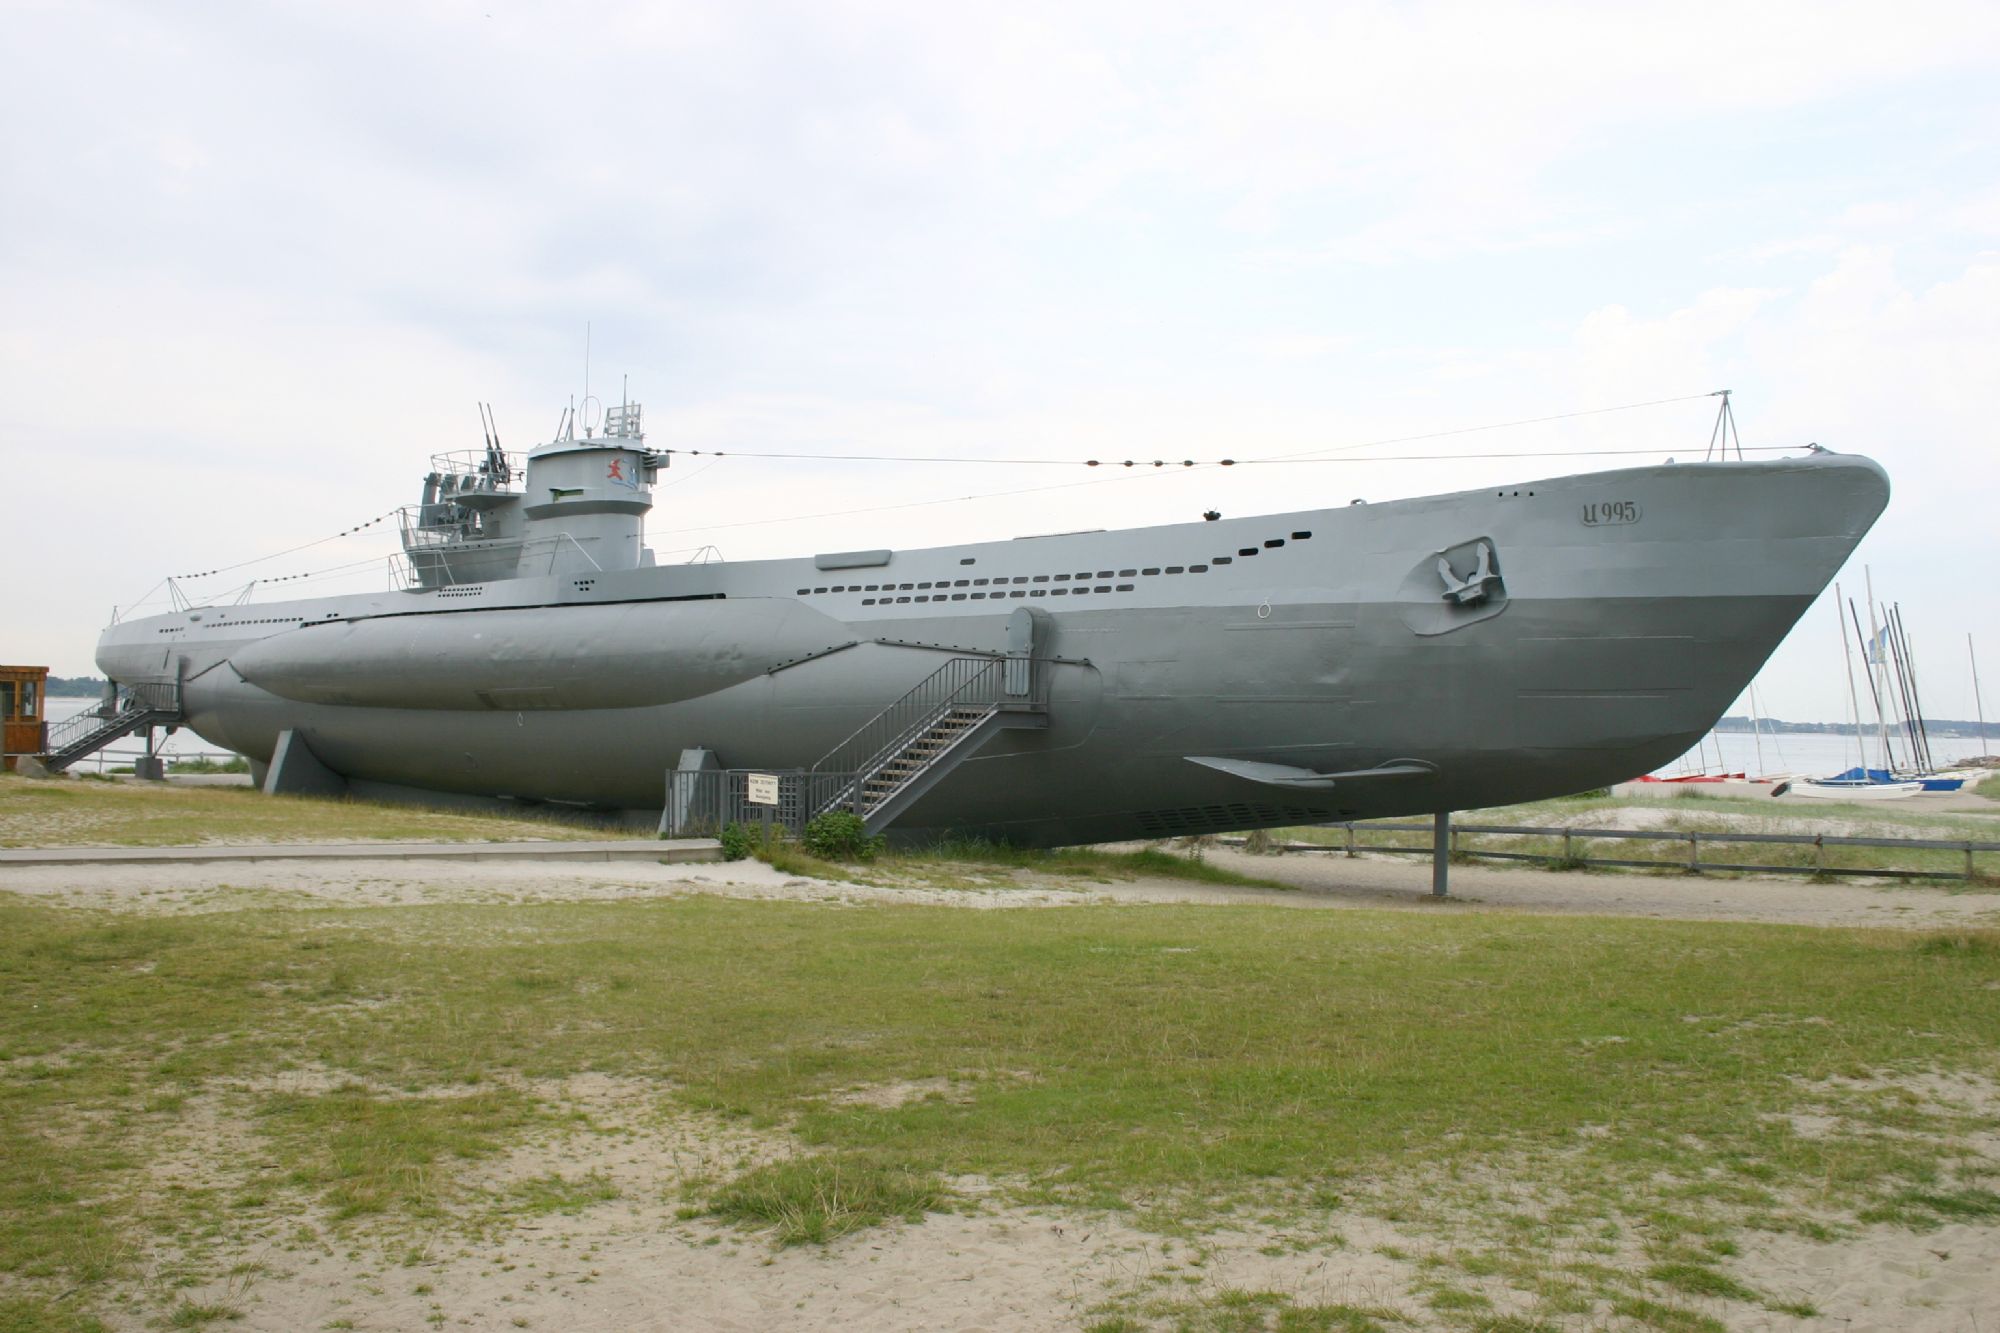 U-Boot U 995 Museum - KilRoyTrip